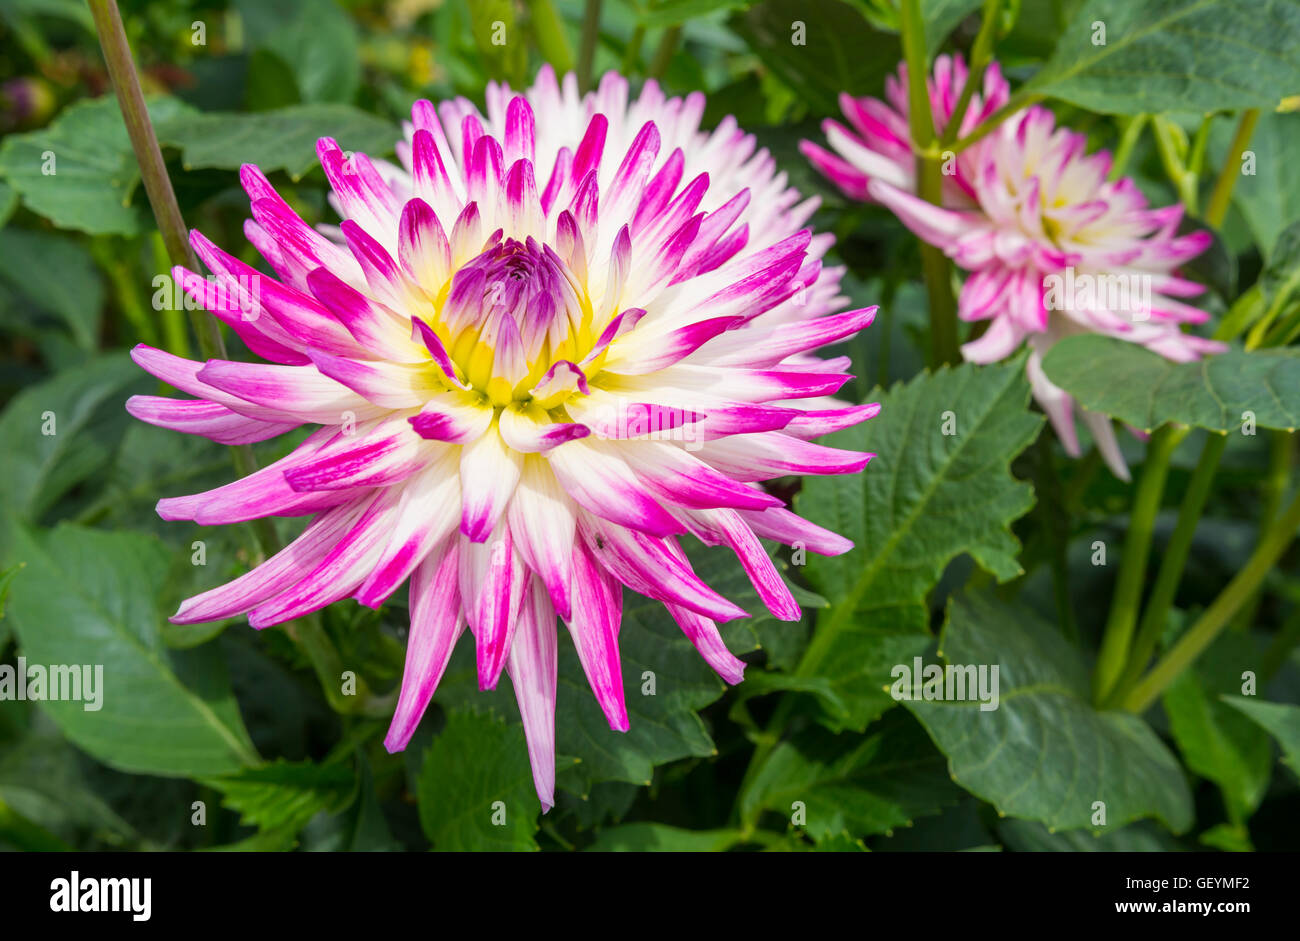 Flor de dalia reino unido fotografías e imágenes de alta resolución - Alamy